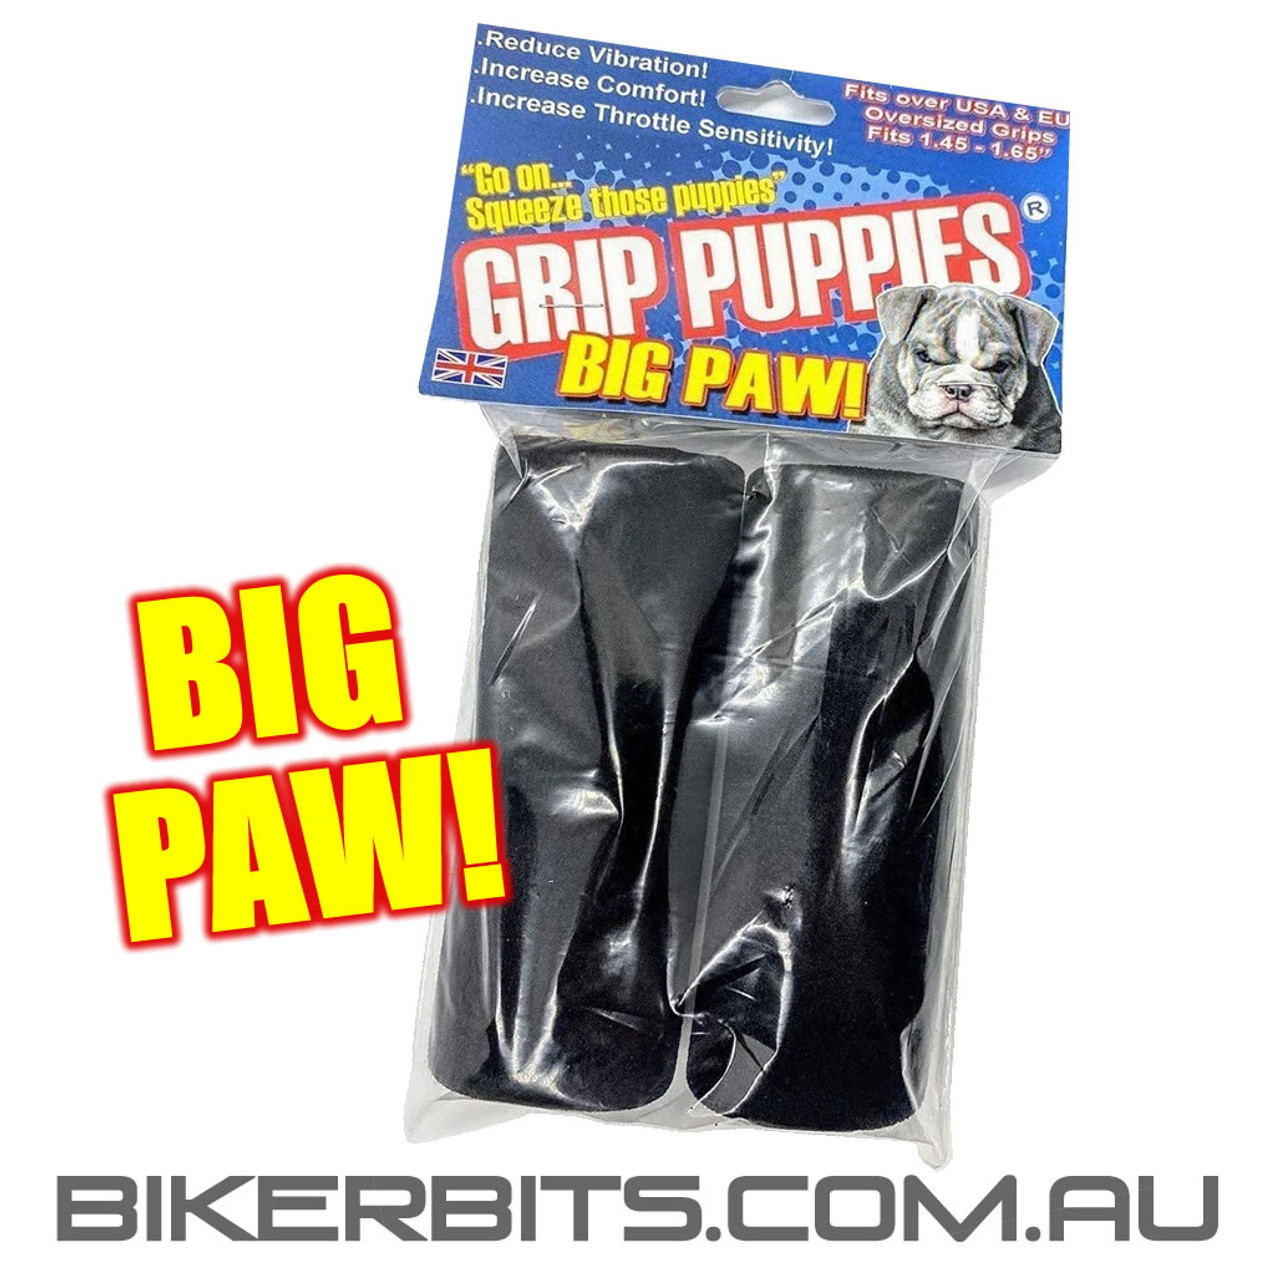 Grip Puppies - Big Paw